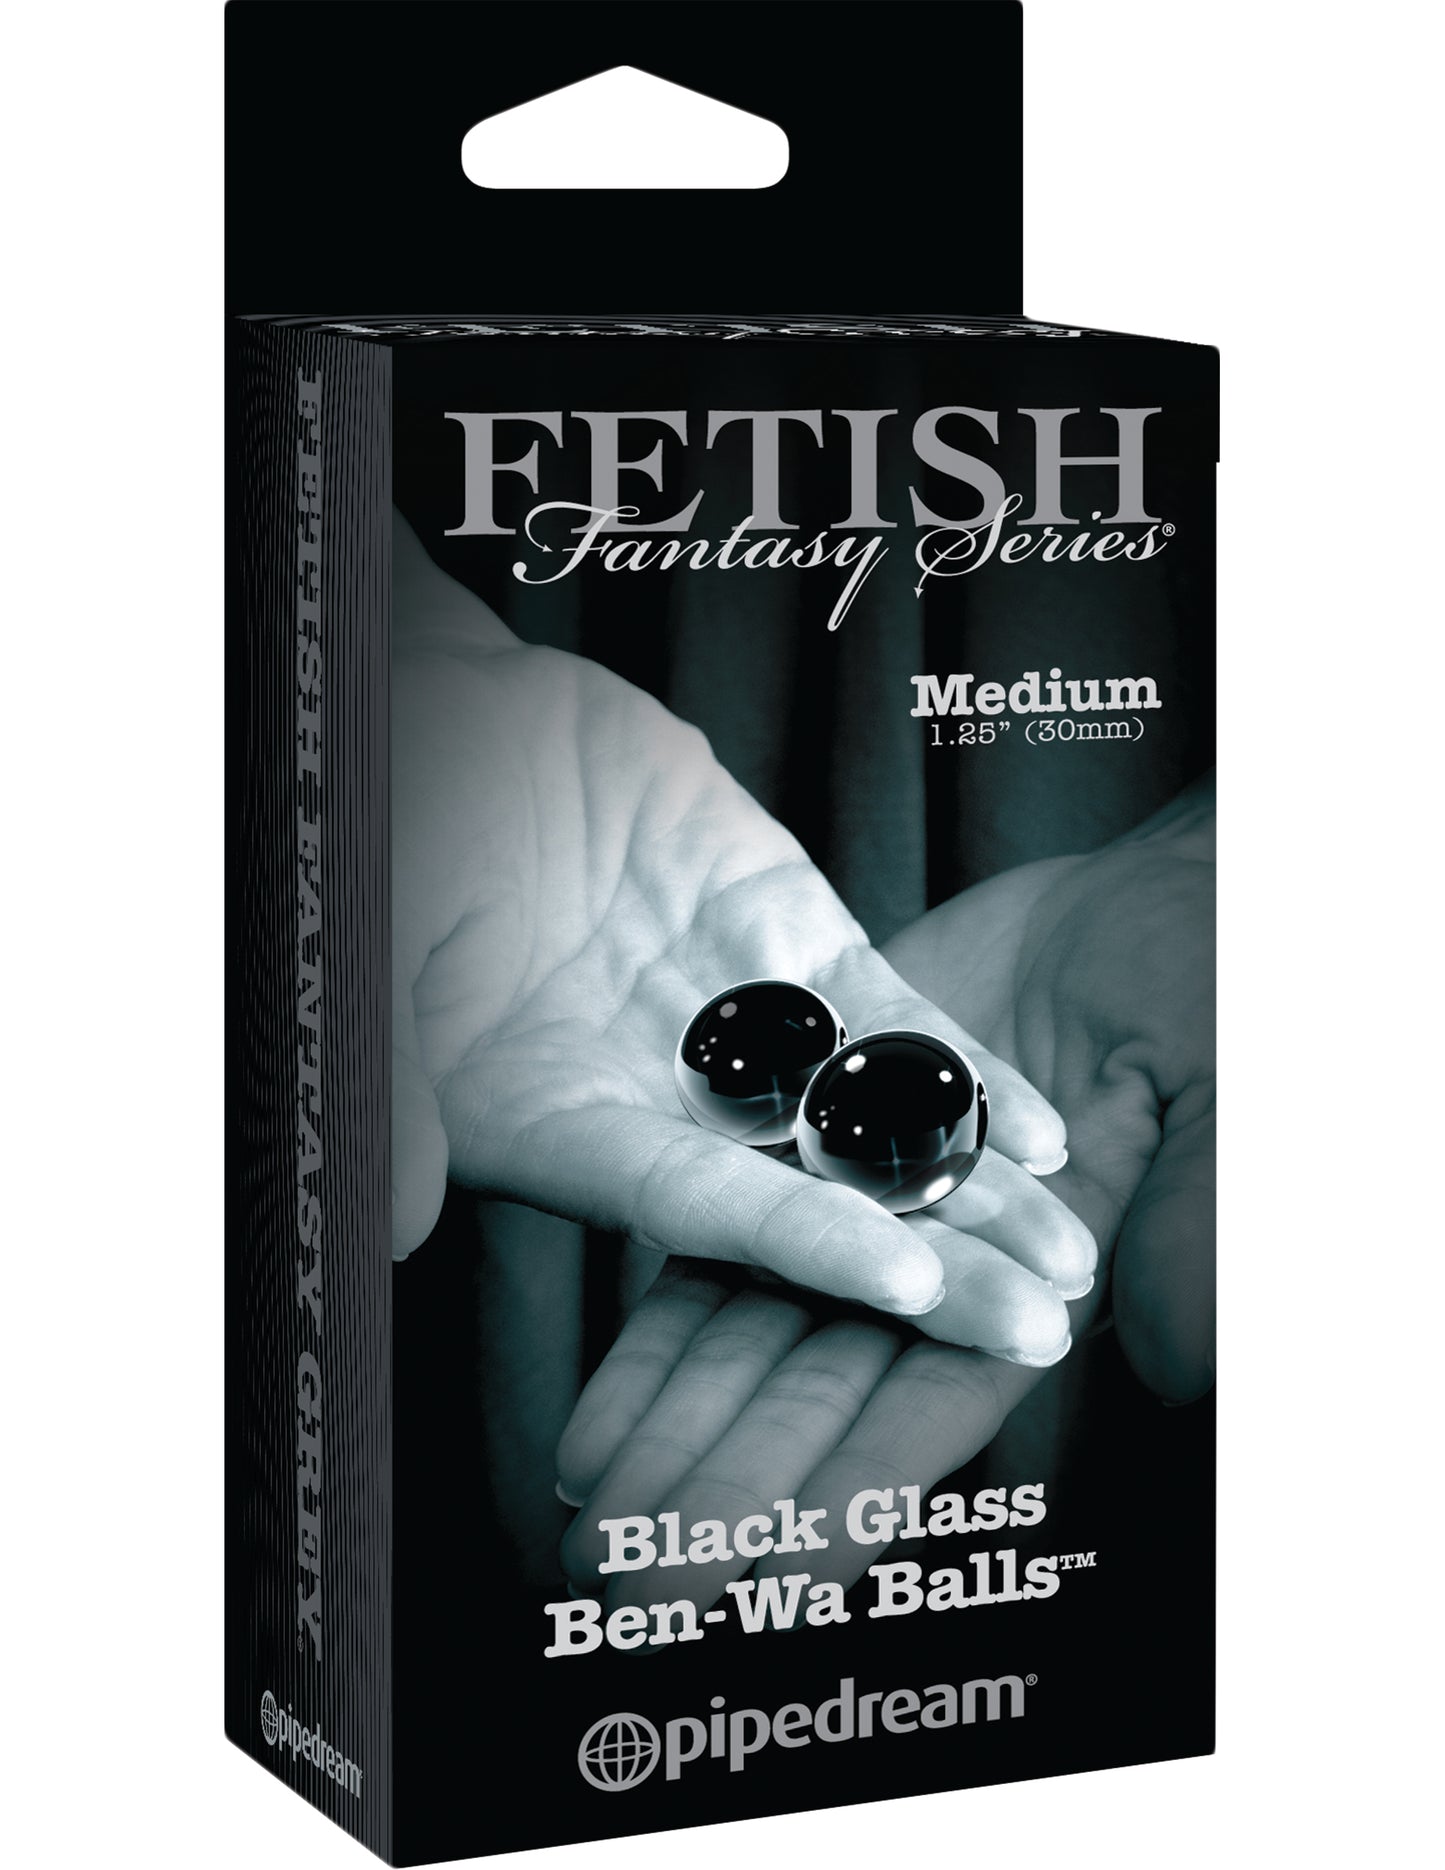 Black Glass Ben-Wa Balls Medium by Fetish Fantasy Limited Edition